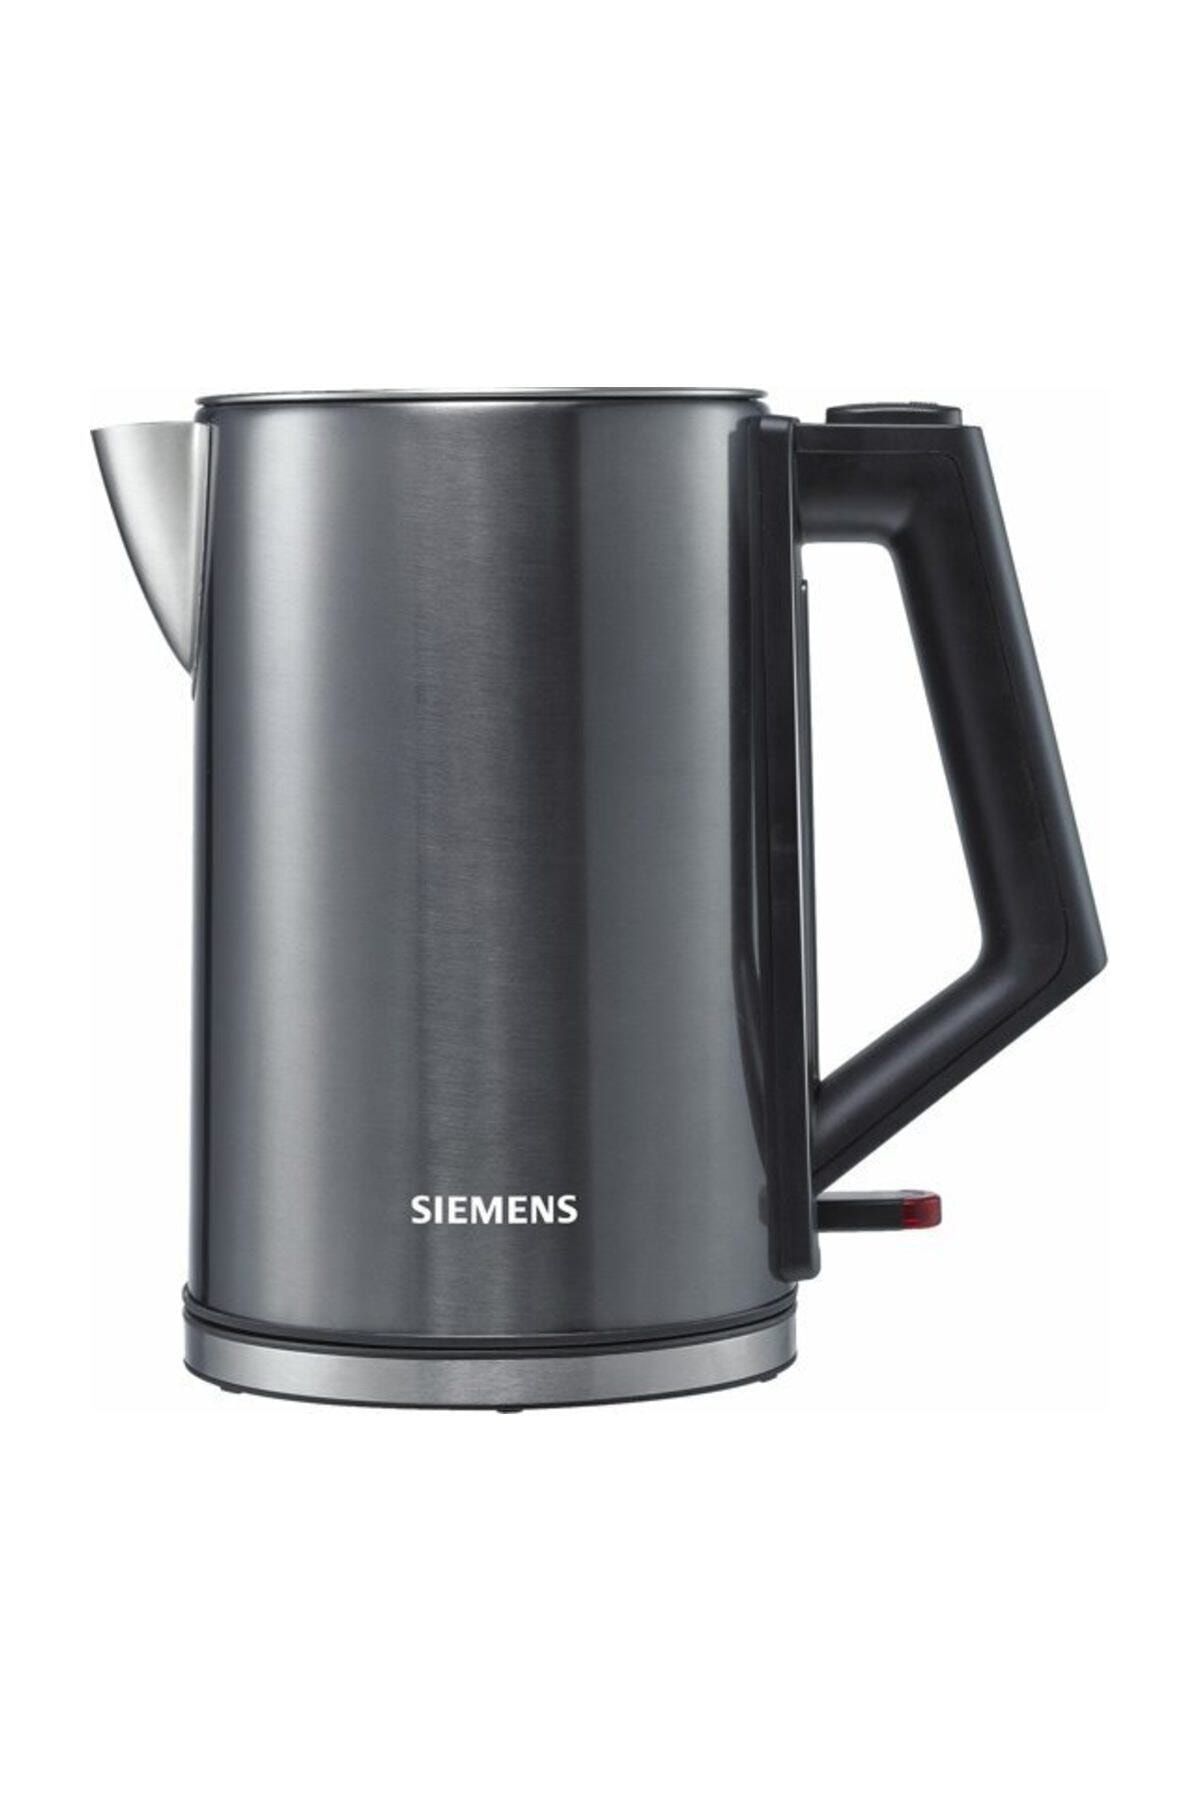 Siemens Tw71005 Su Isıtıcı Antrasit / Siyah SIETW71005